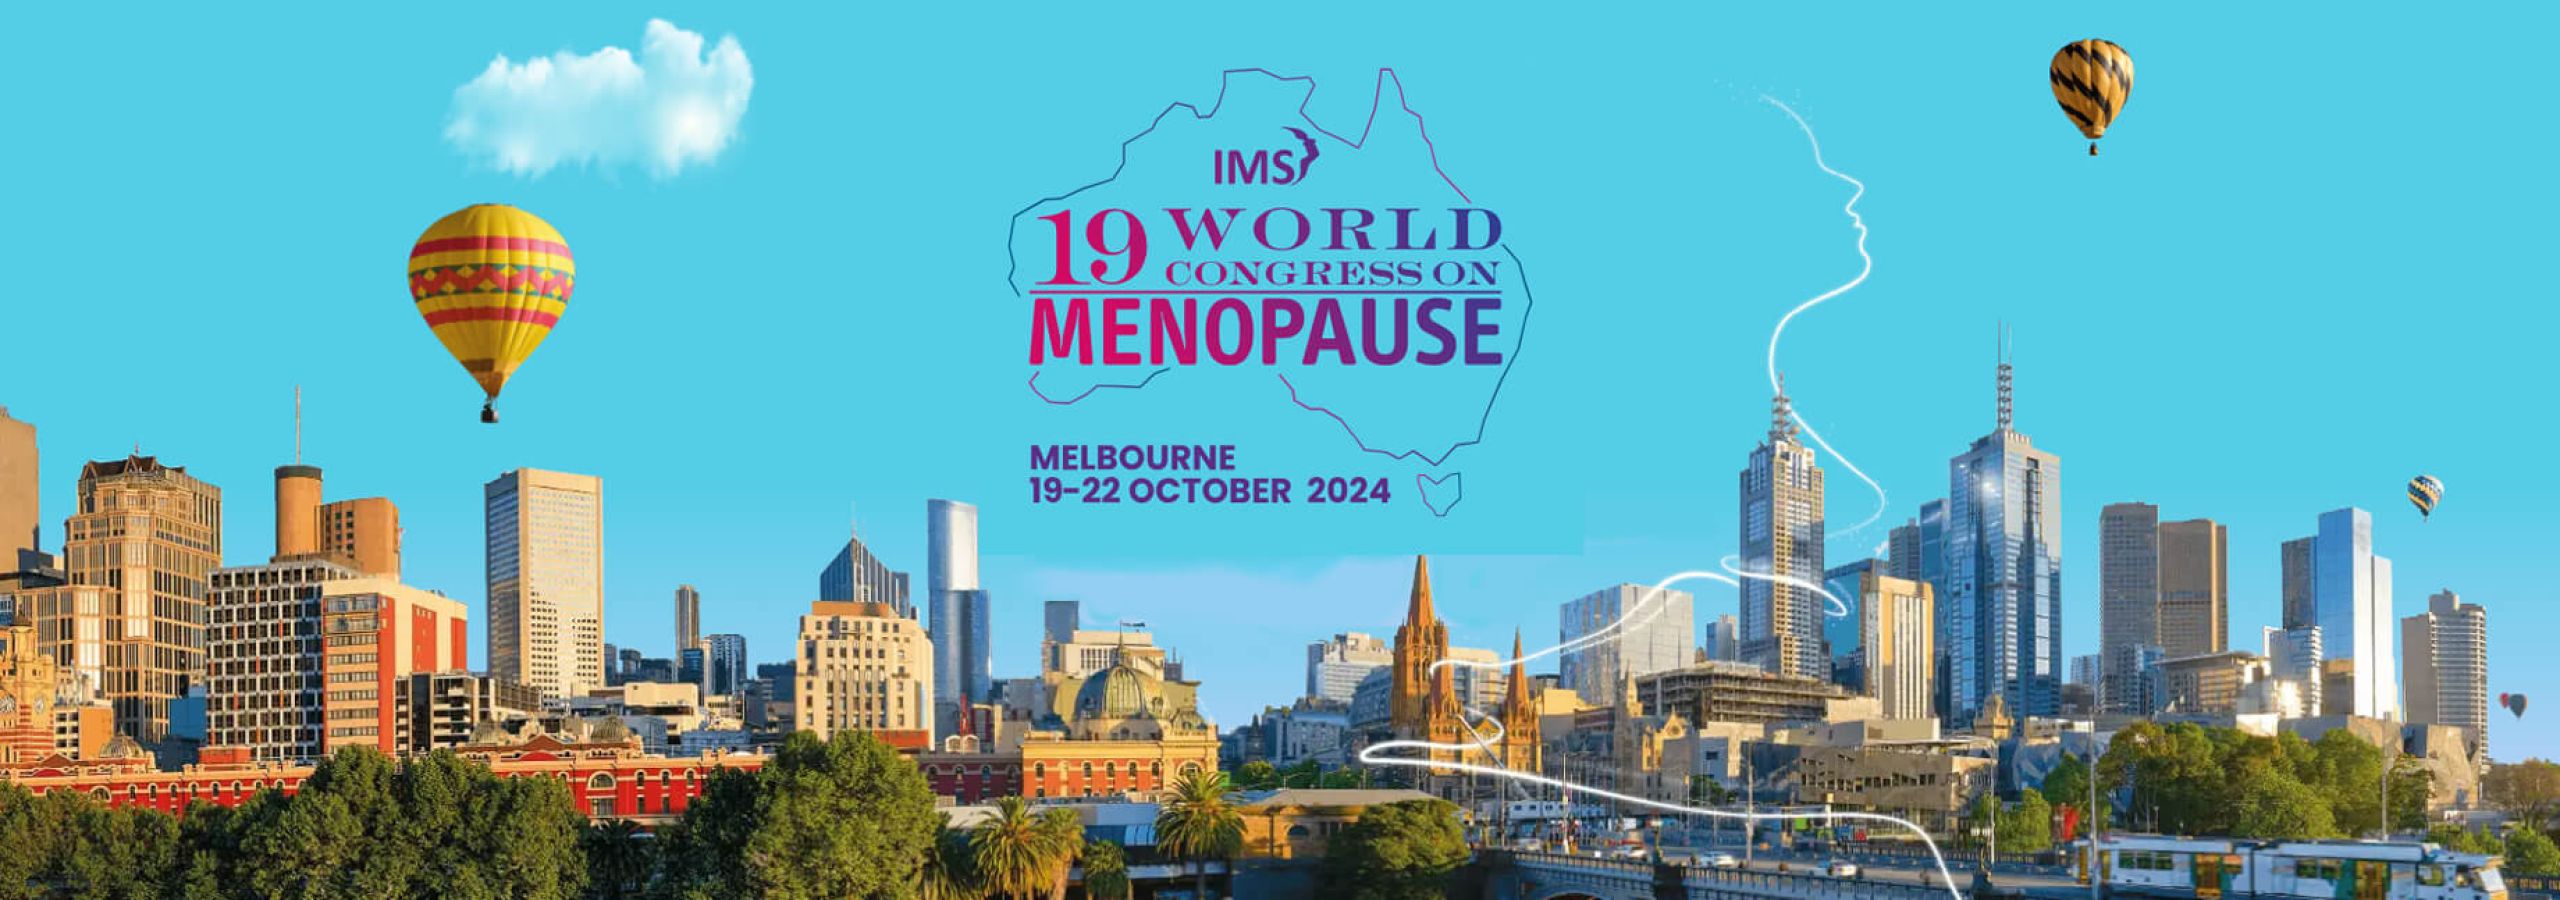 IMS 19th World Congress on Menopause